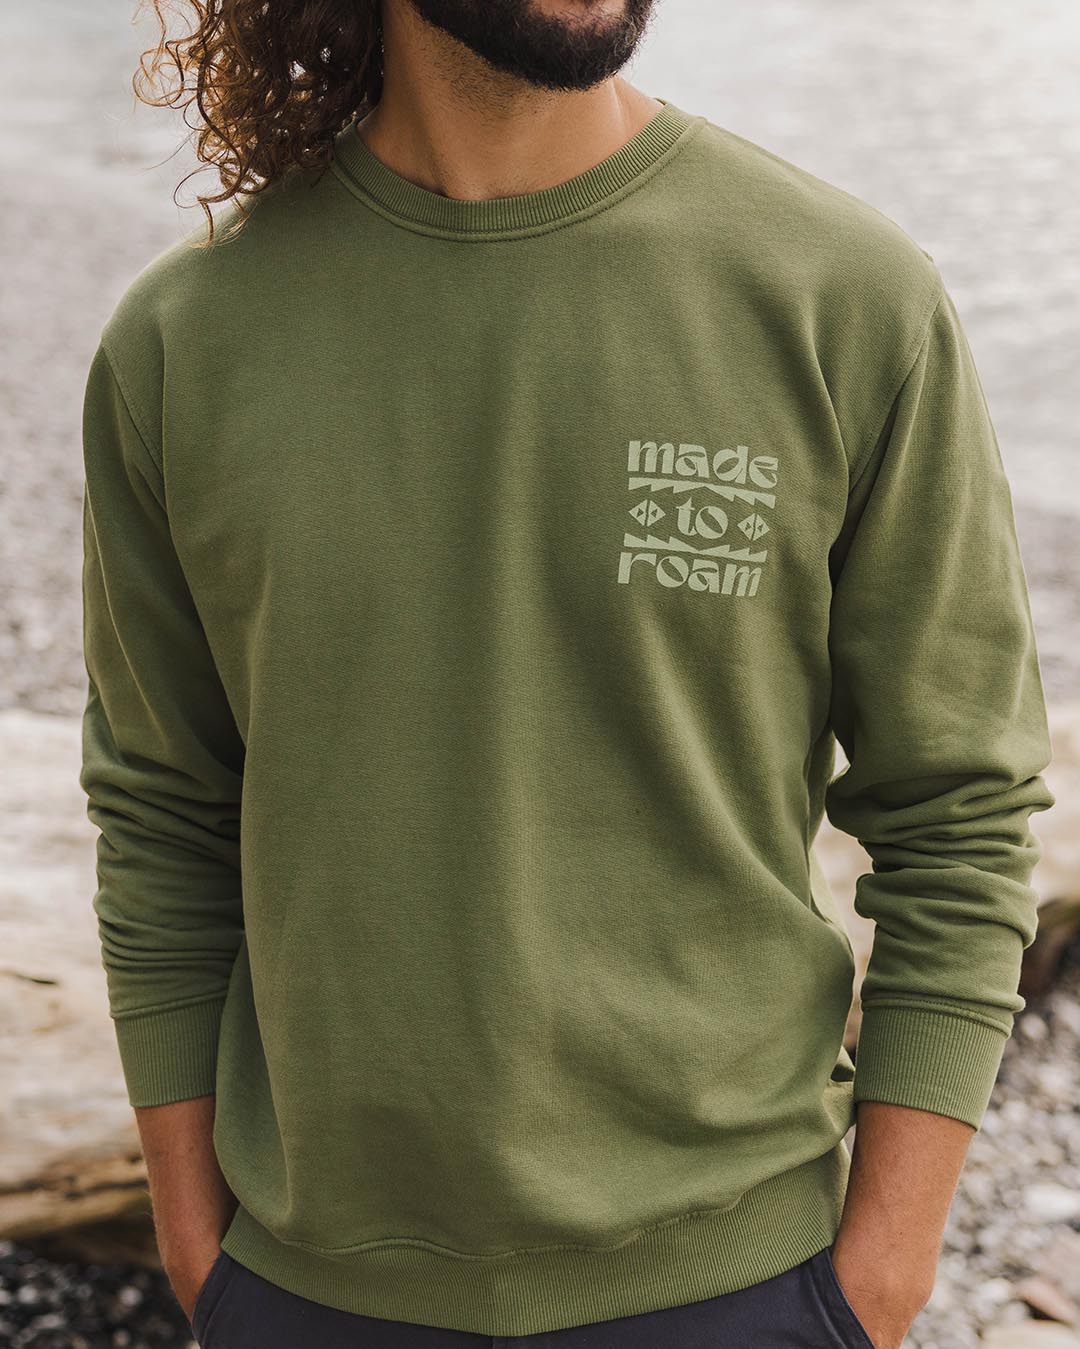 Sunrise Recycled Cotton Sweatshirt - Loden Green